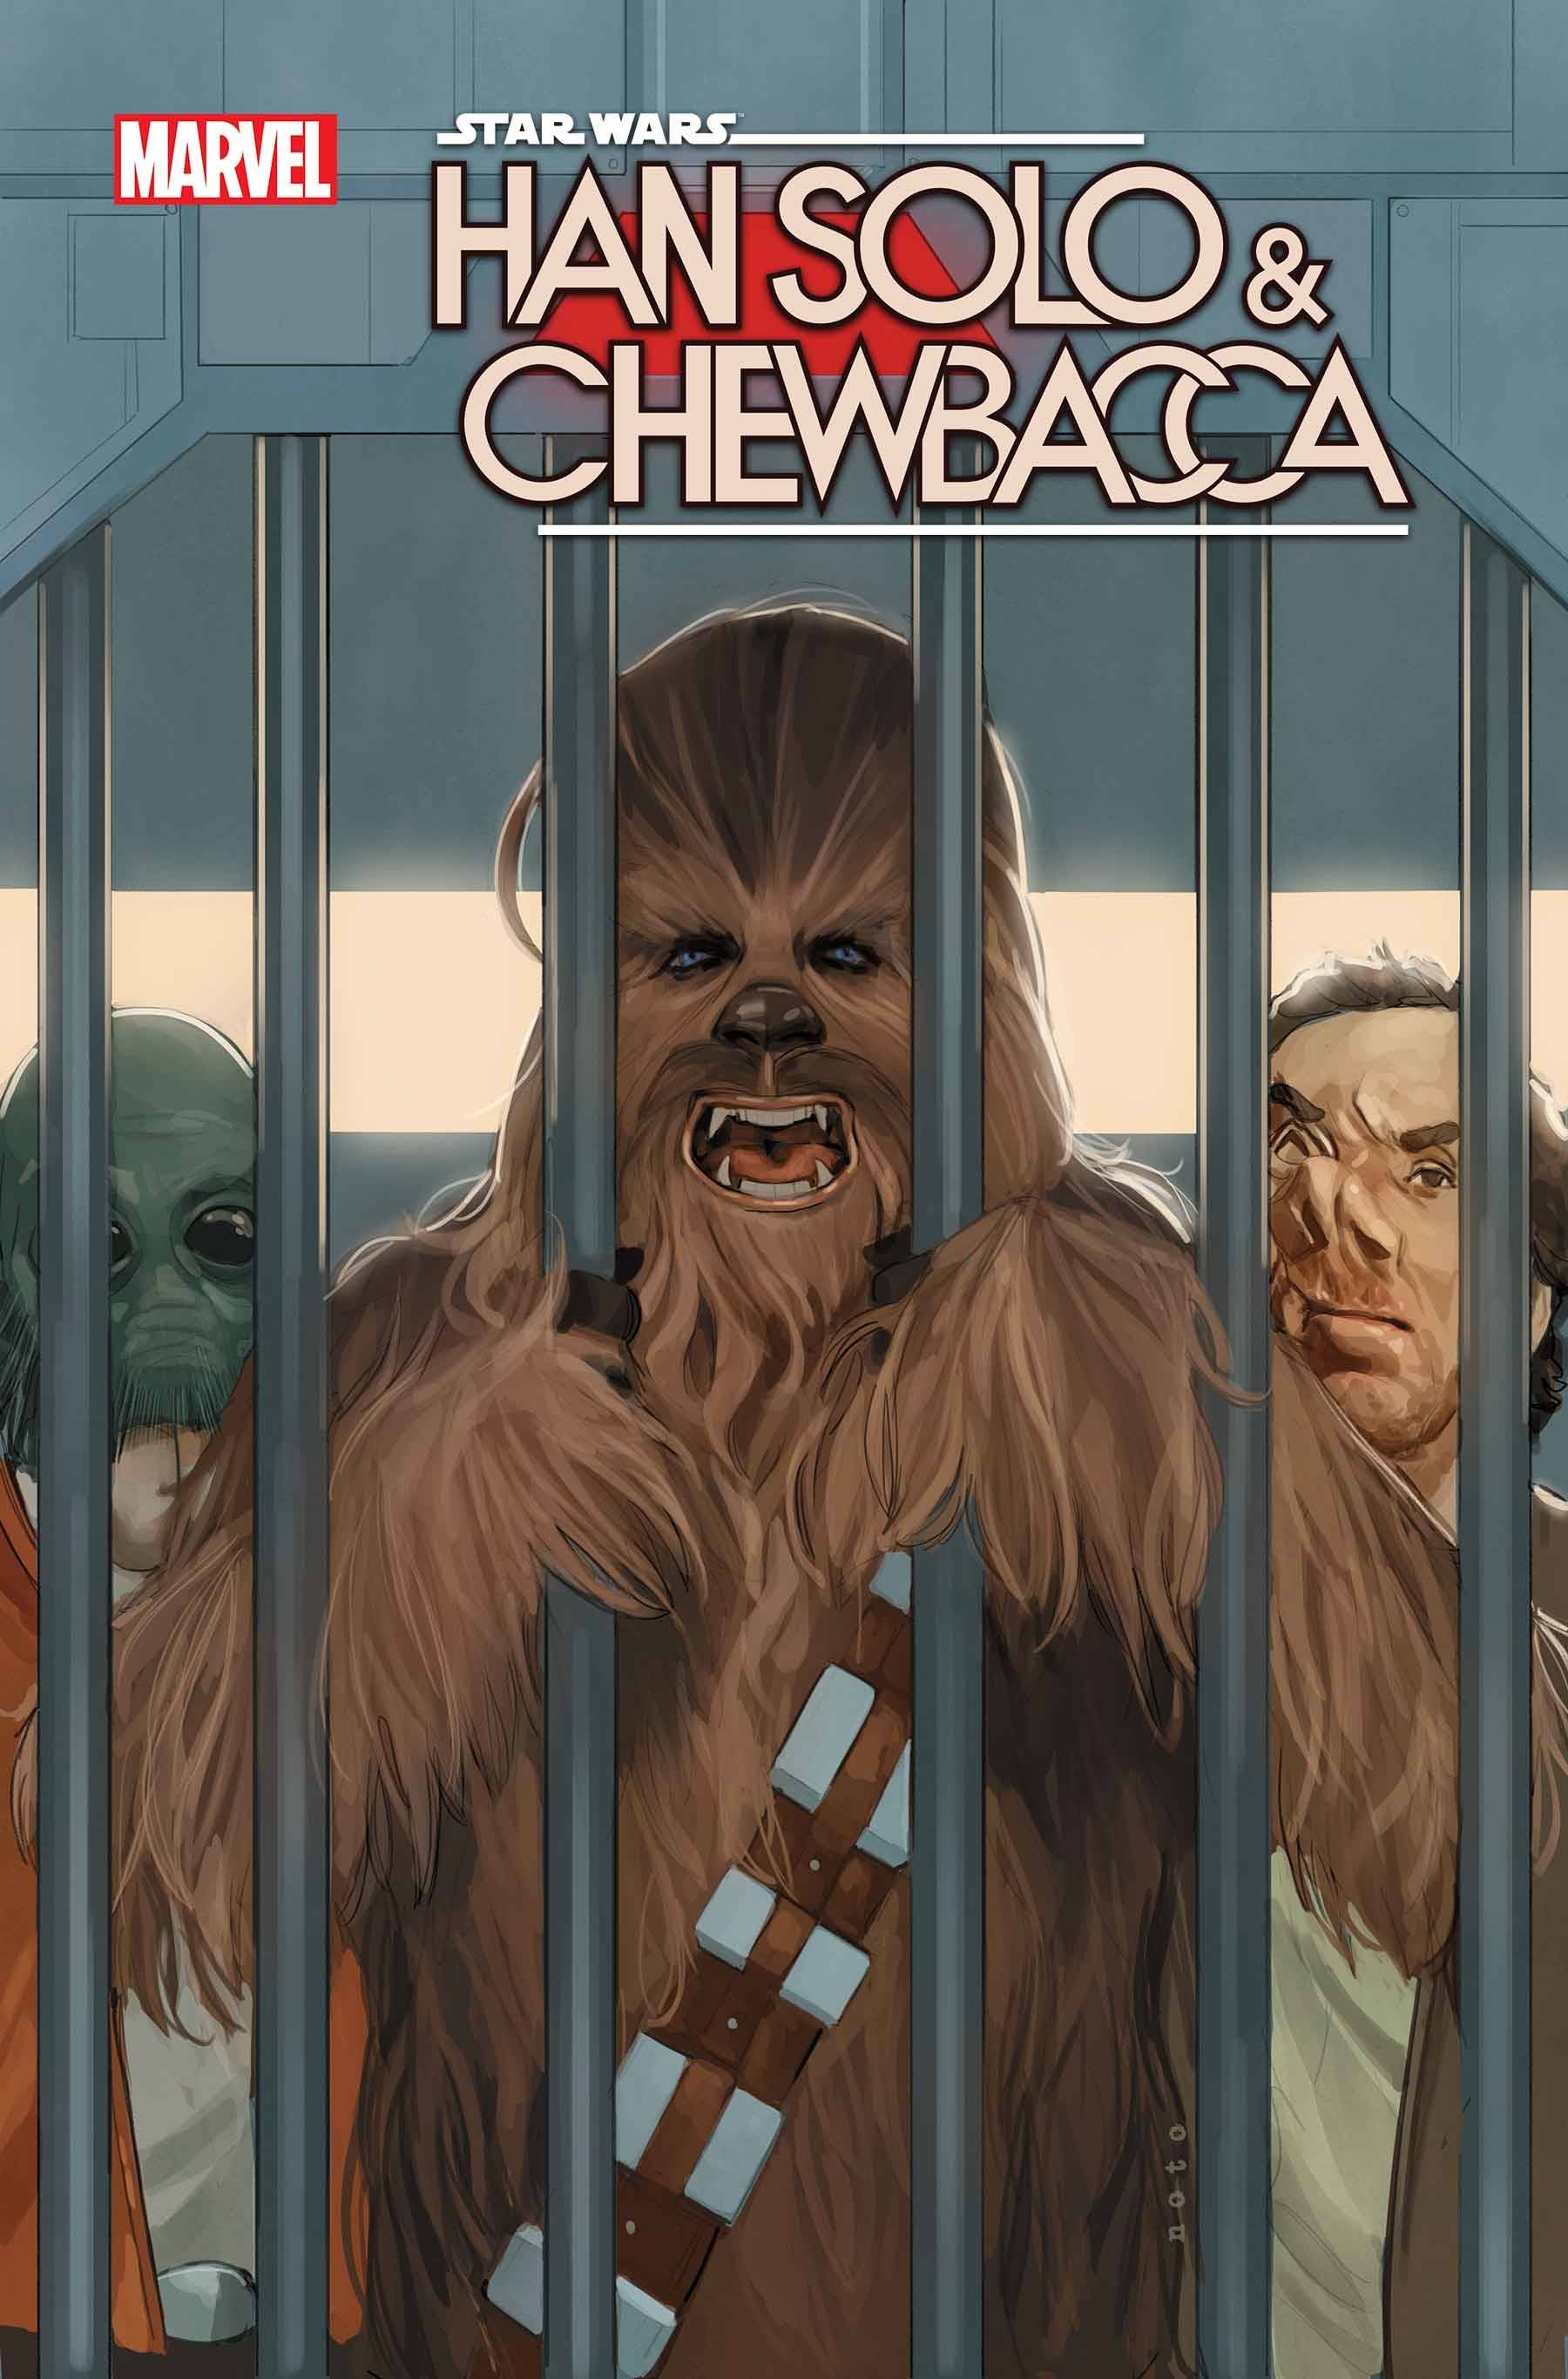 Star Wars: Han Solo & Chewbacca #6 | Fresh Comics